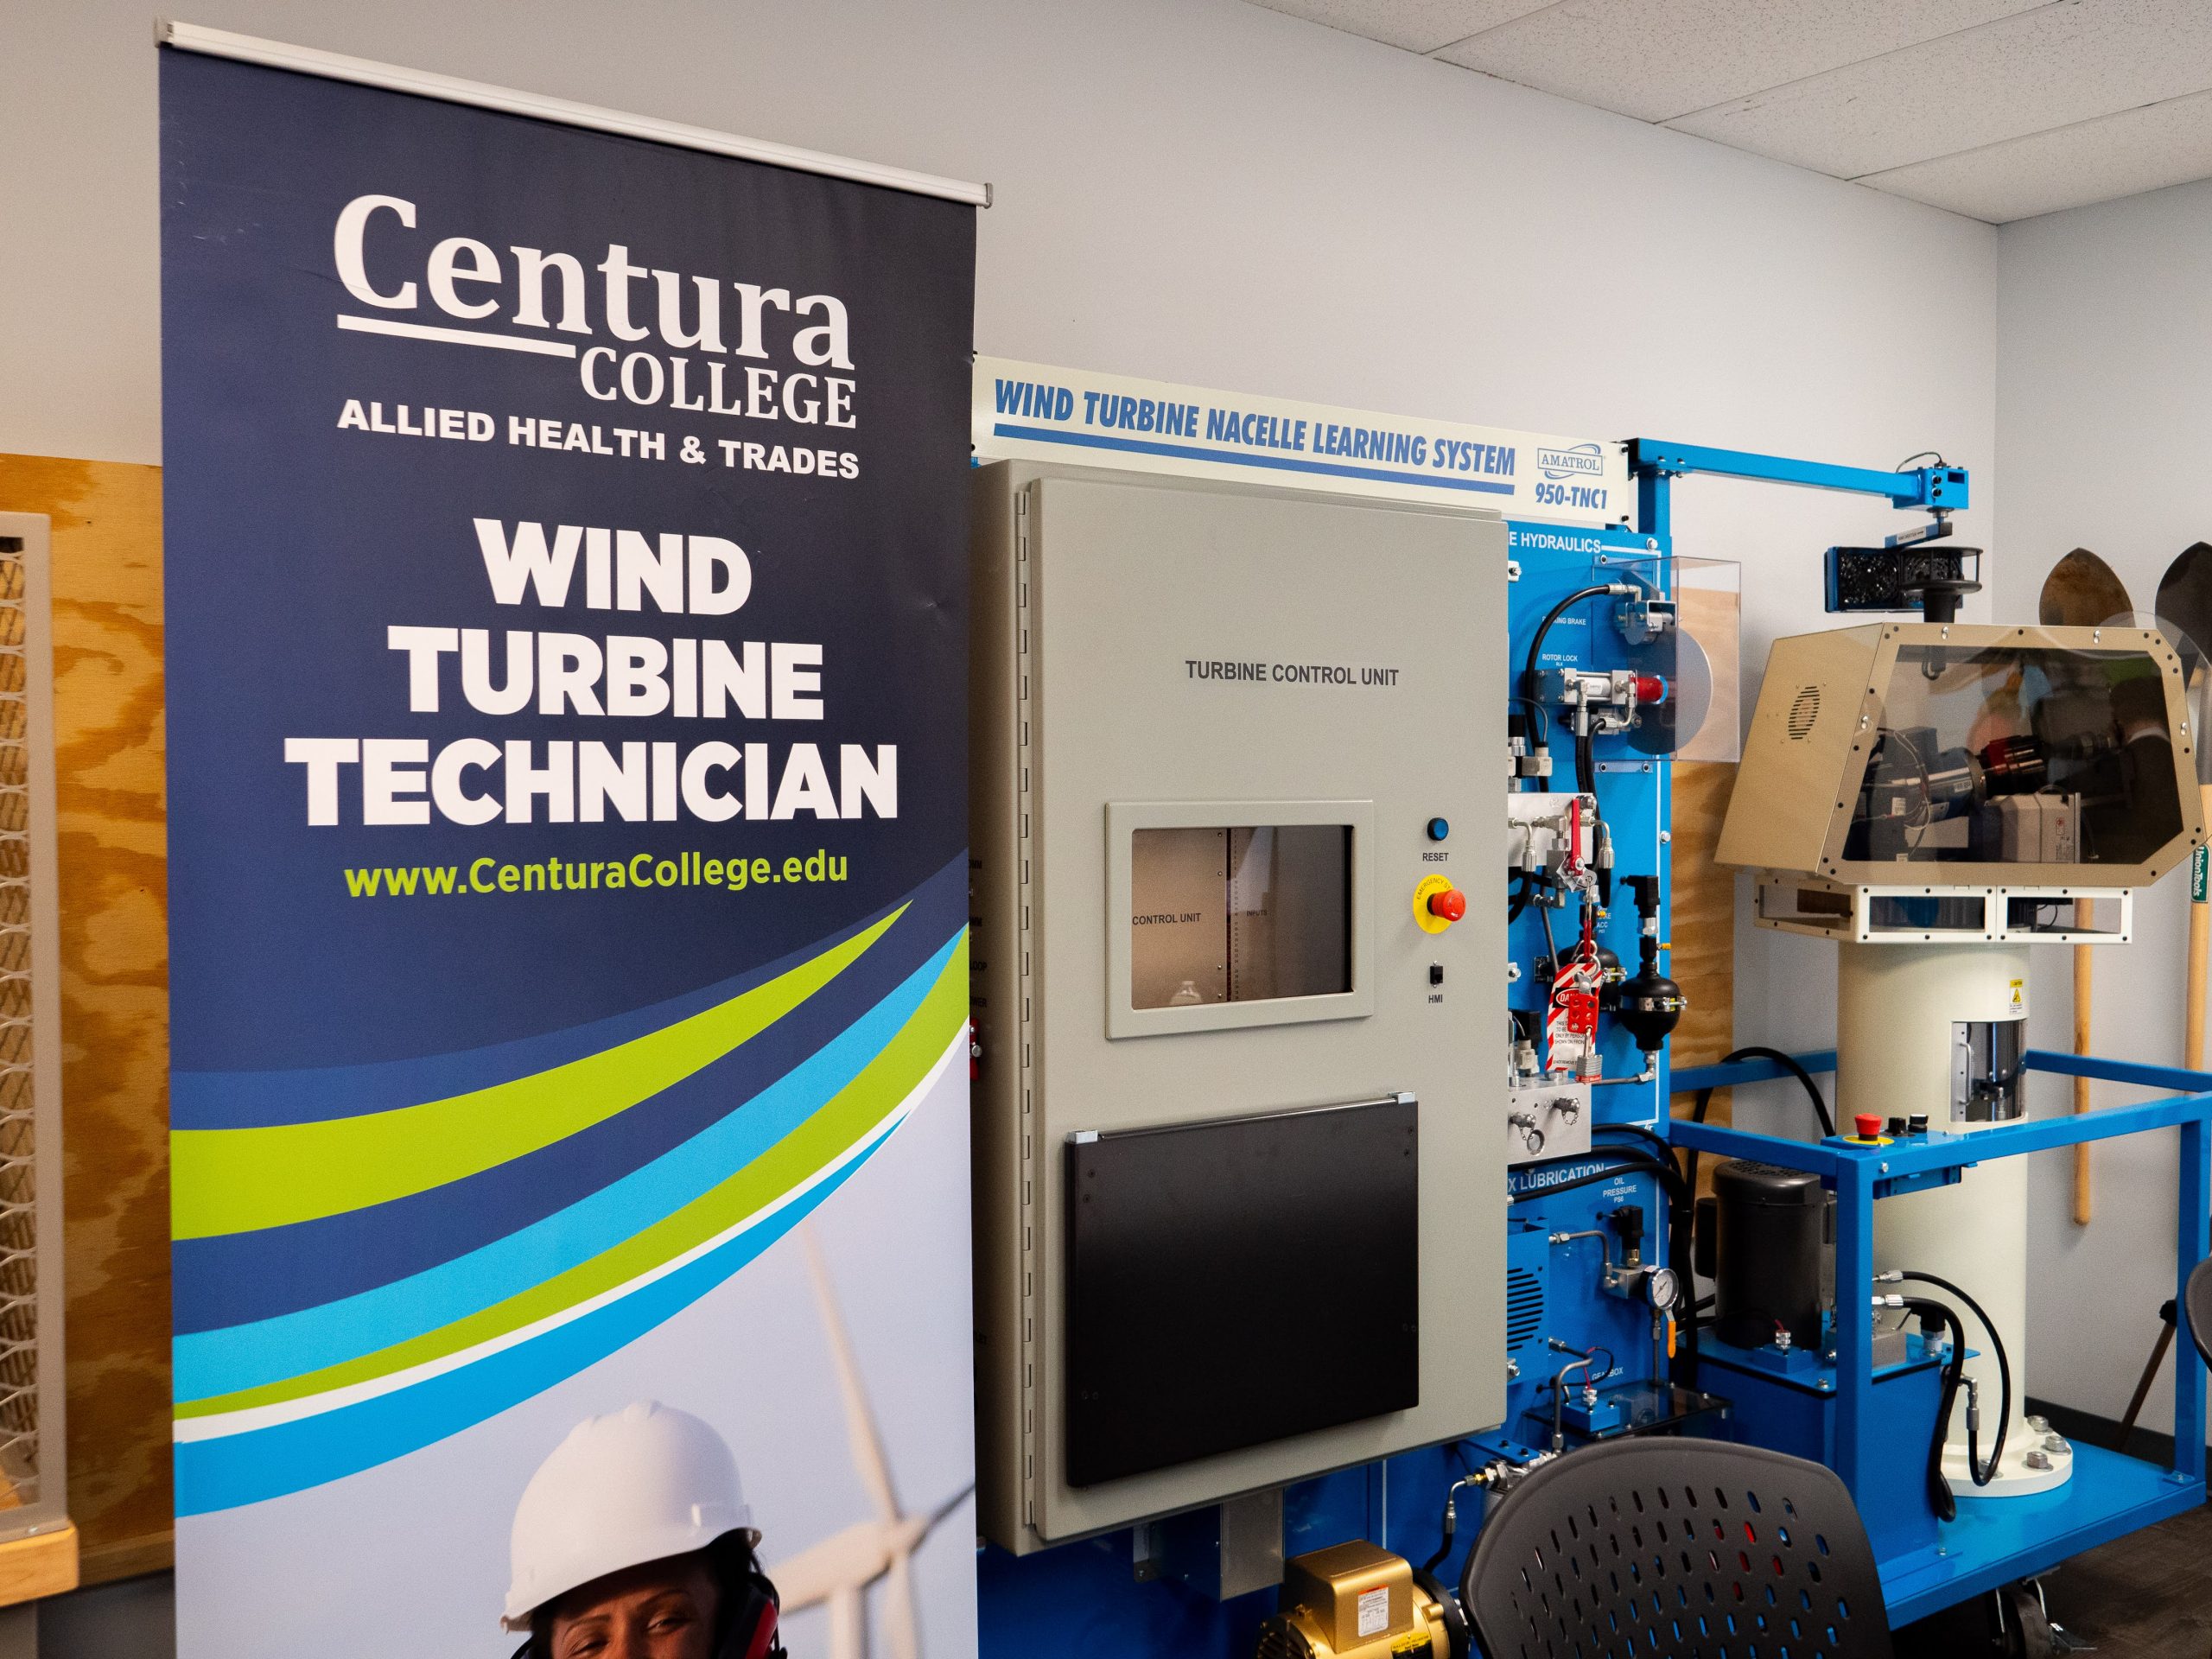 Wind turbine tech training lab at Centura College. 